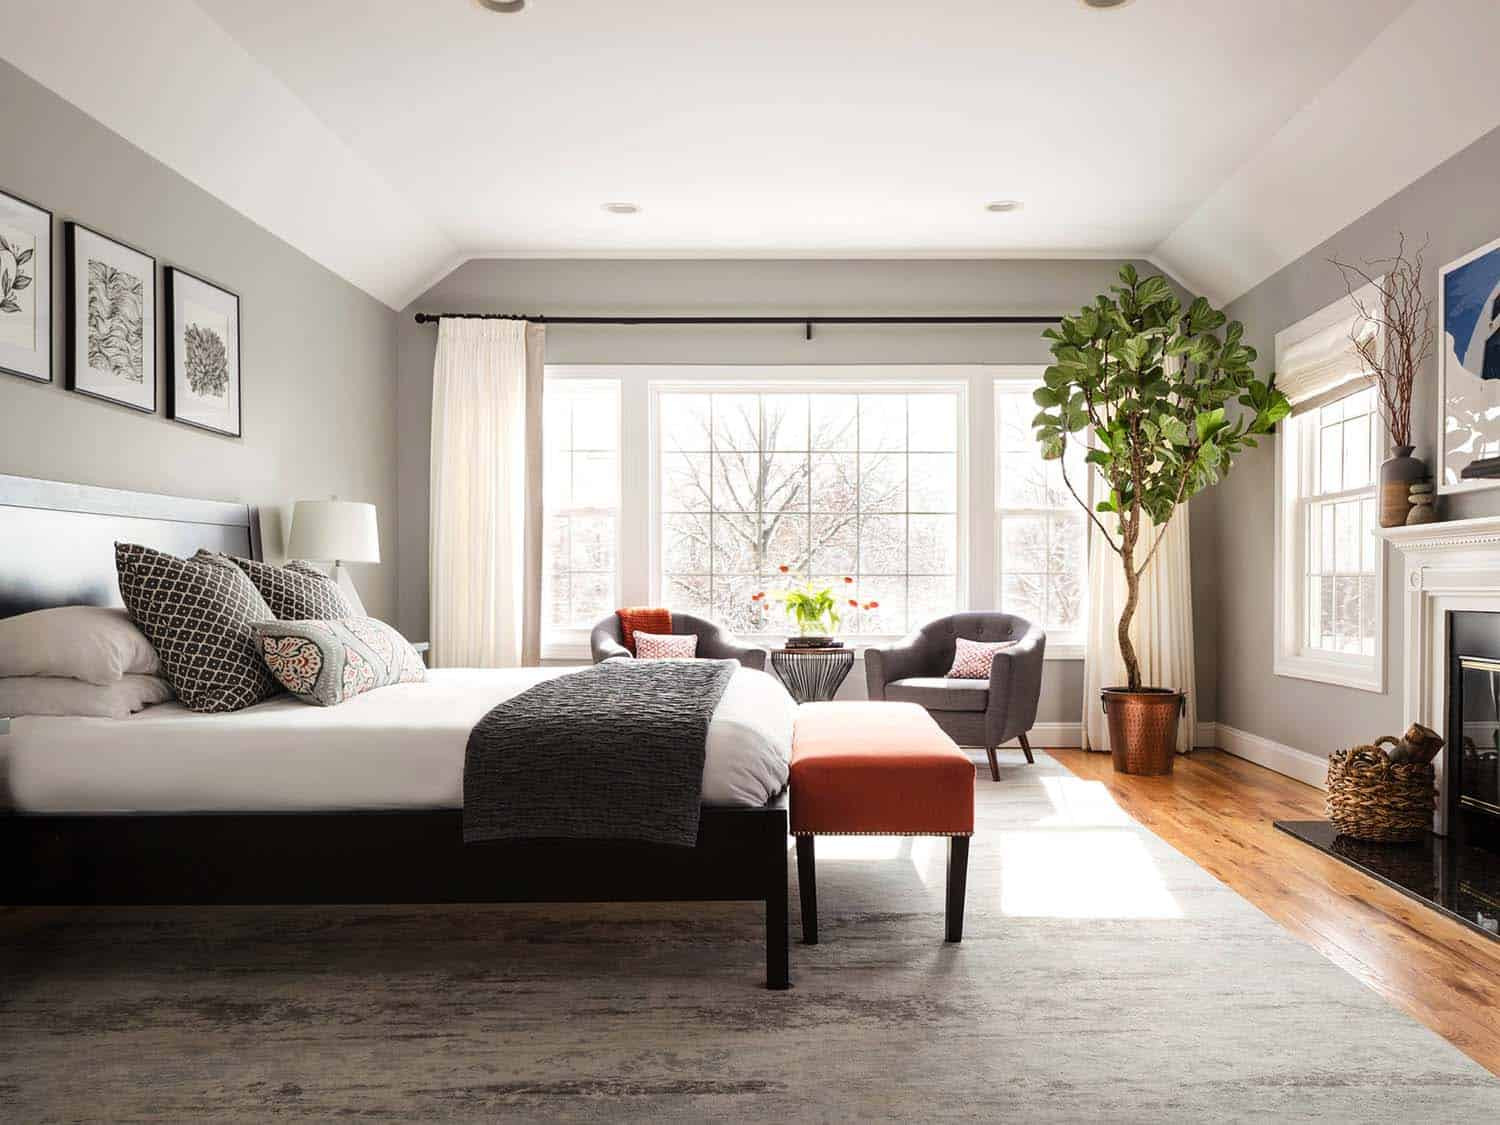 Master Bedroom Design Ideas
 20 Serene And Elegant Master Bedroom Decorating Ideas